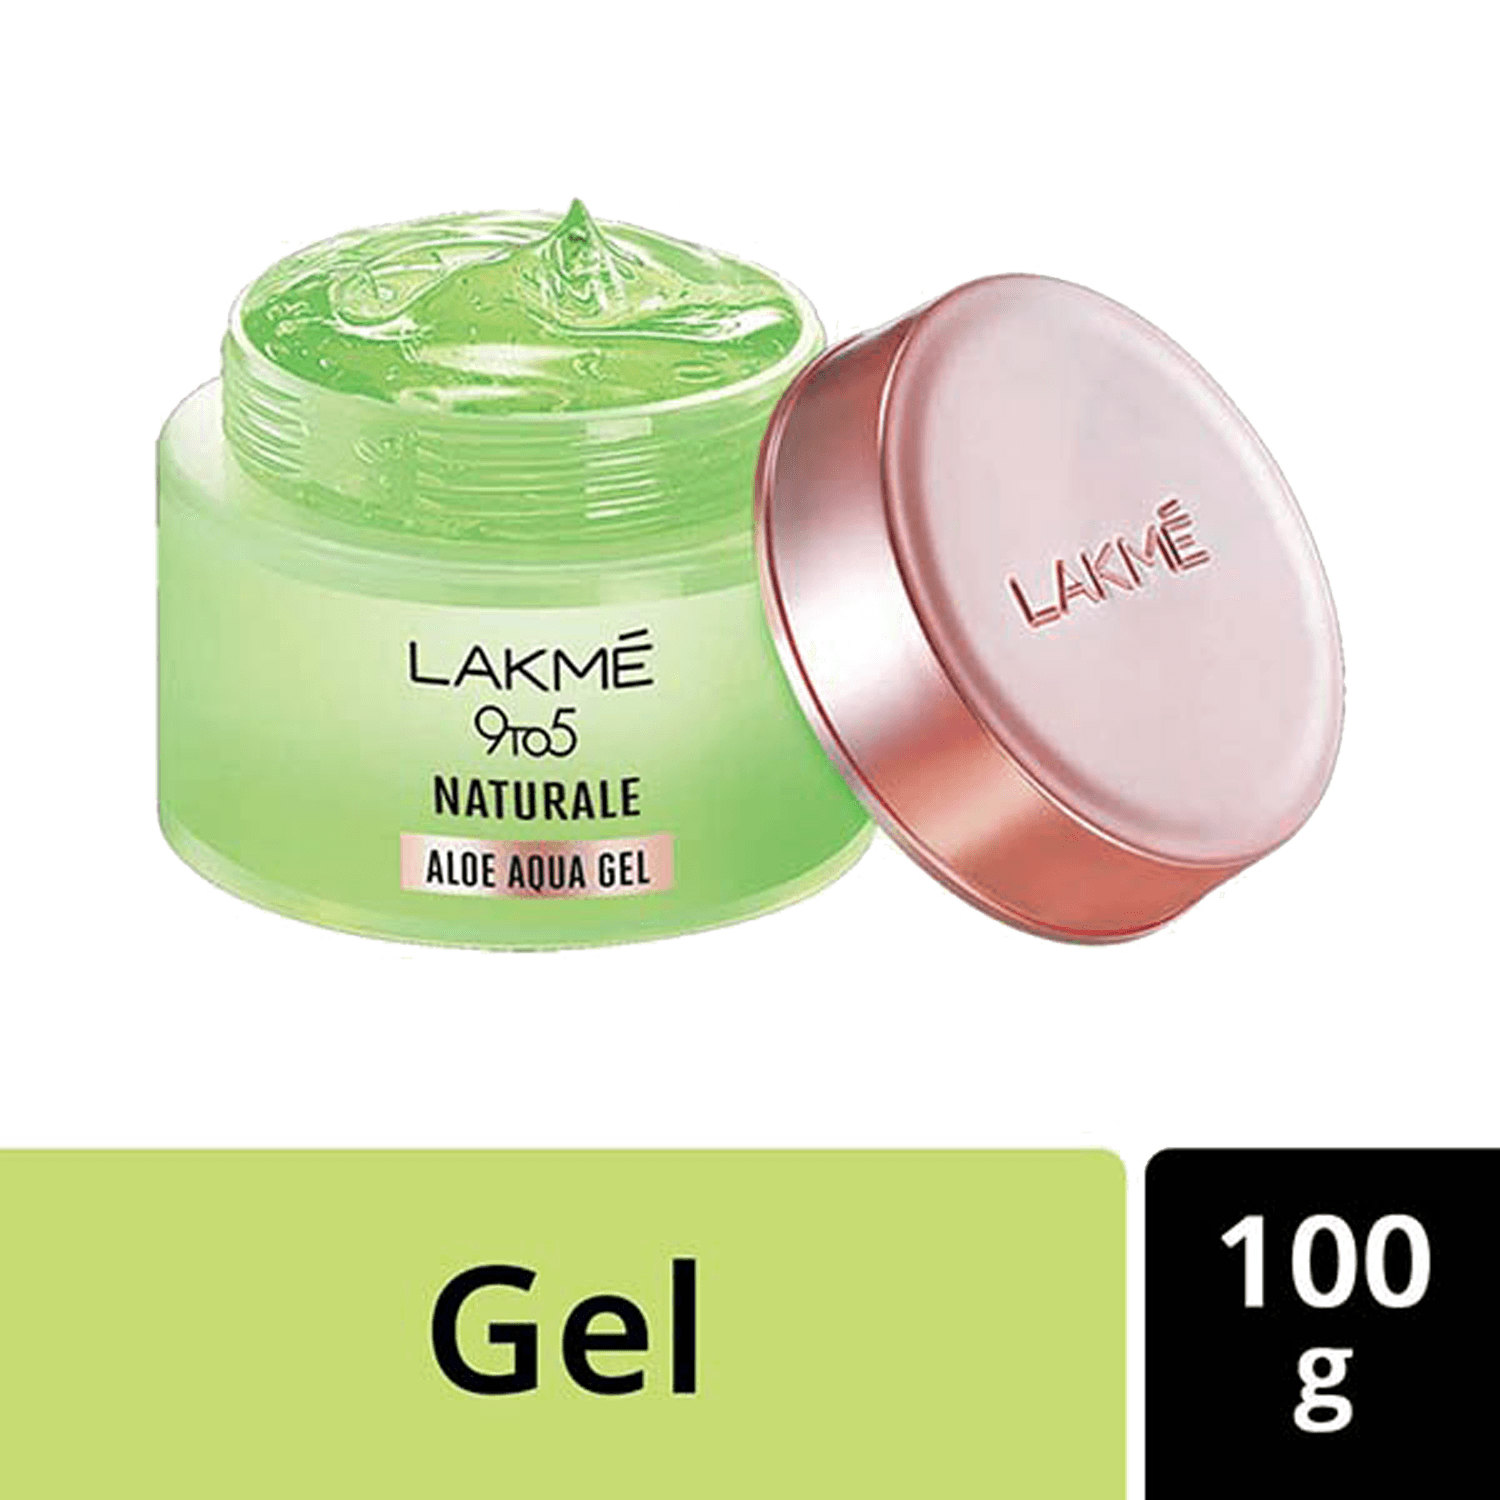 Lakme | Lakme 9To5 Natural Aloe Aqua Gel (100g)